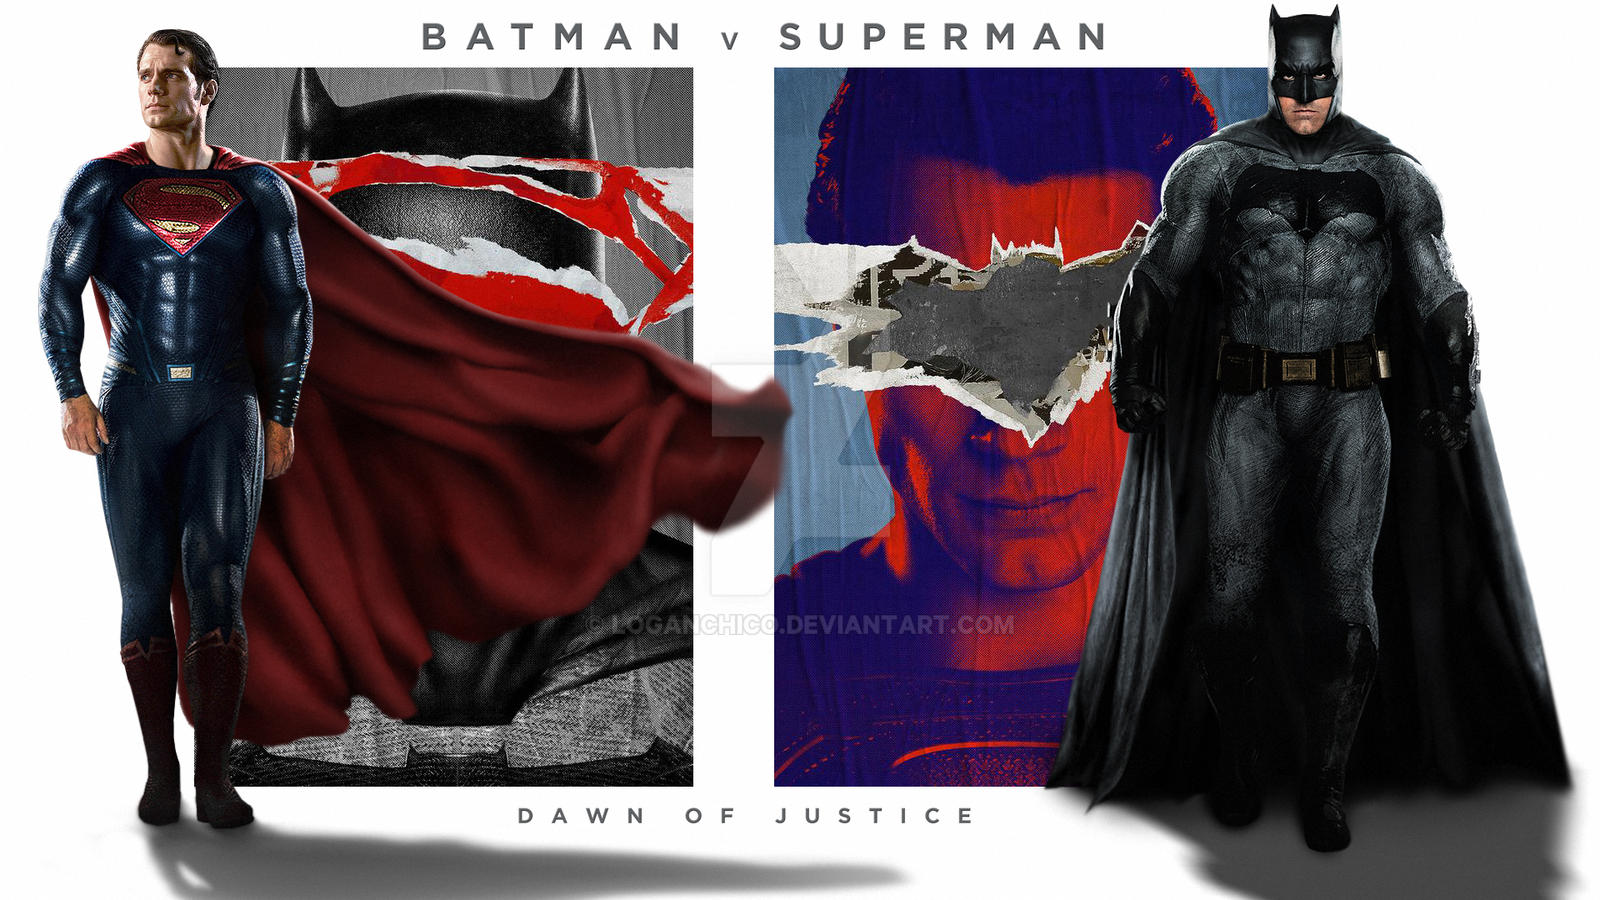 Batman v Superman Wallpaper 02 by LoganChico on DeviantArt